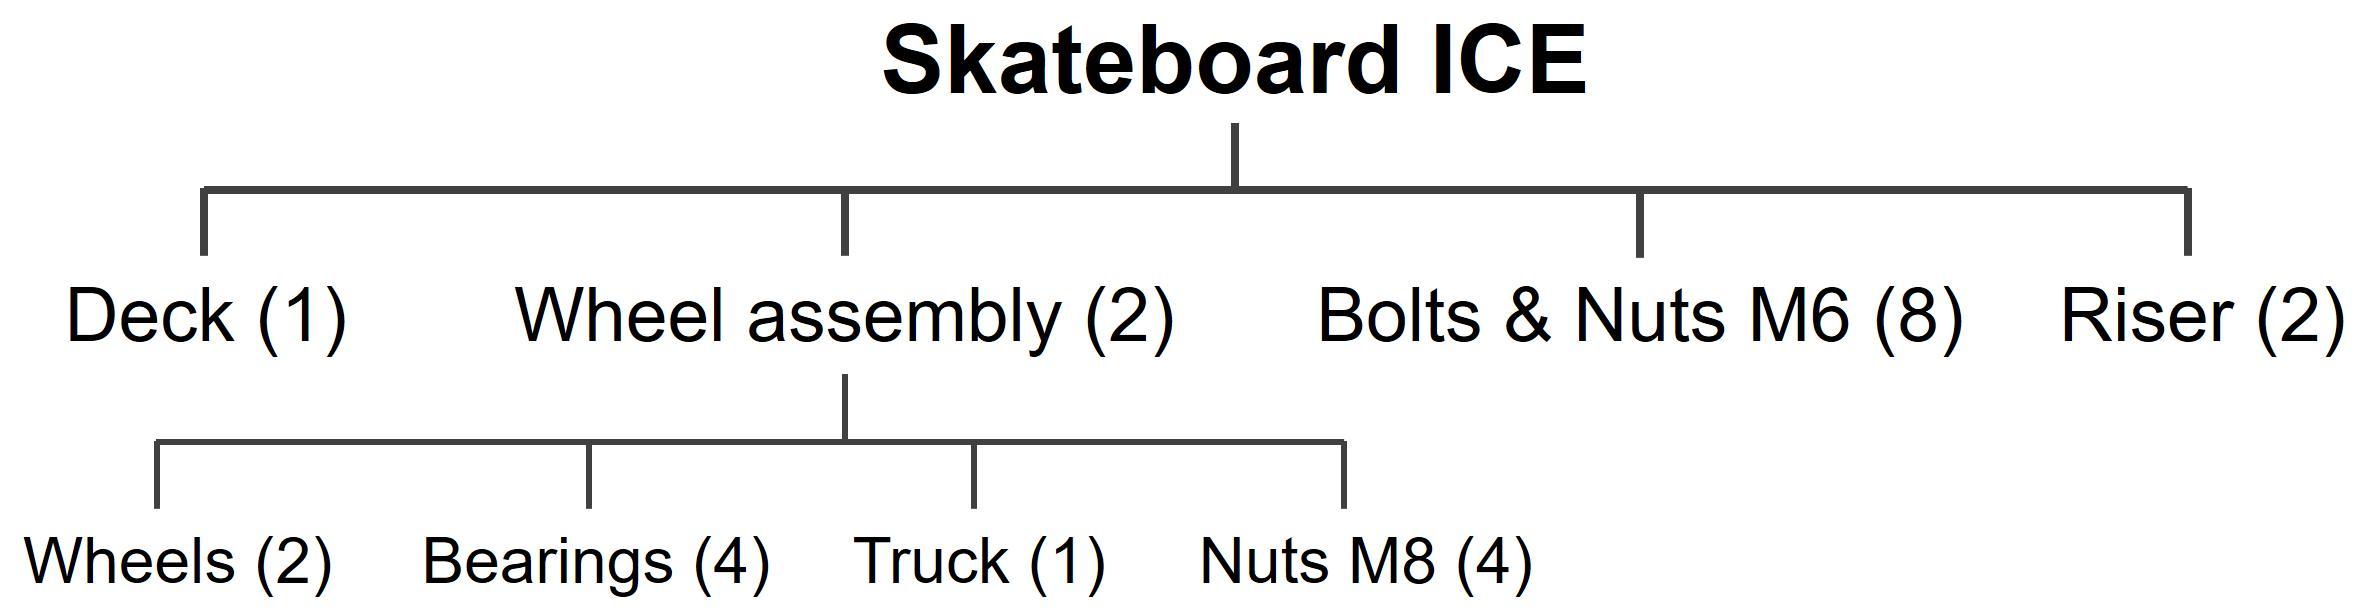 Skateboard ICE Deck (1) Wheel assembly (2) Bolts & Nuts M6 (8) Riser (2) Wheels (2) Bearings (4) Truck (1) Nuts M8 (4)